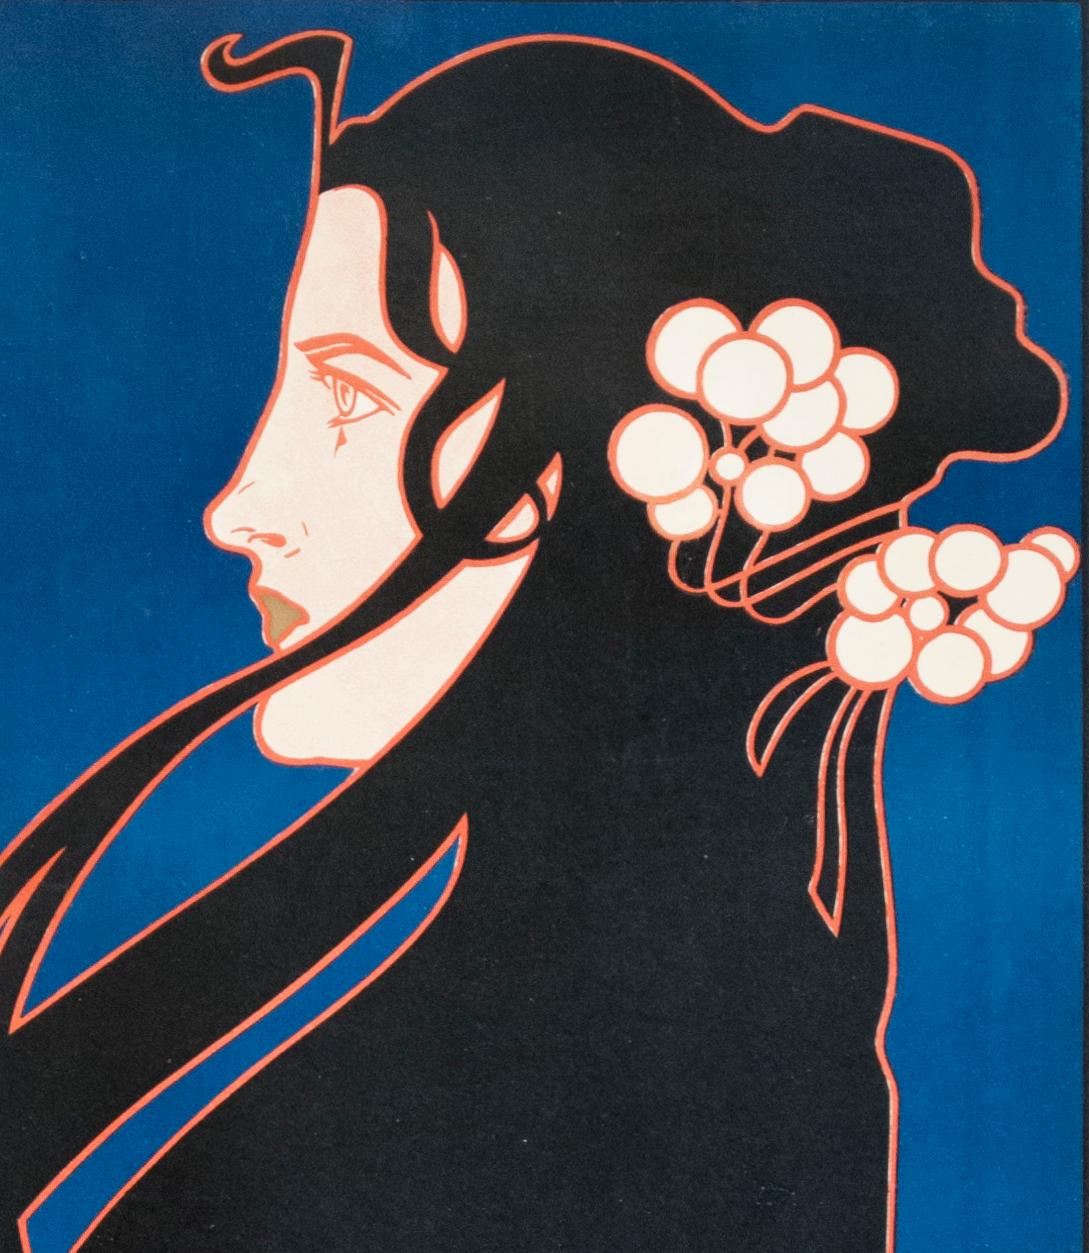 Fromme's Kalender Art Nouveau Lithograph Poster Koloman Moser Vienna Secession For Sale 2